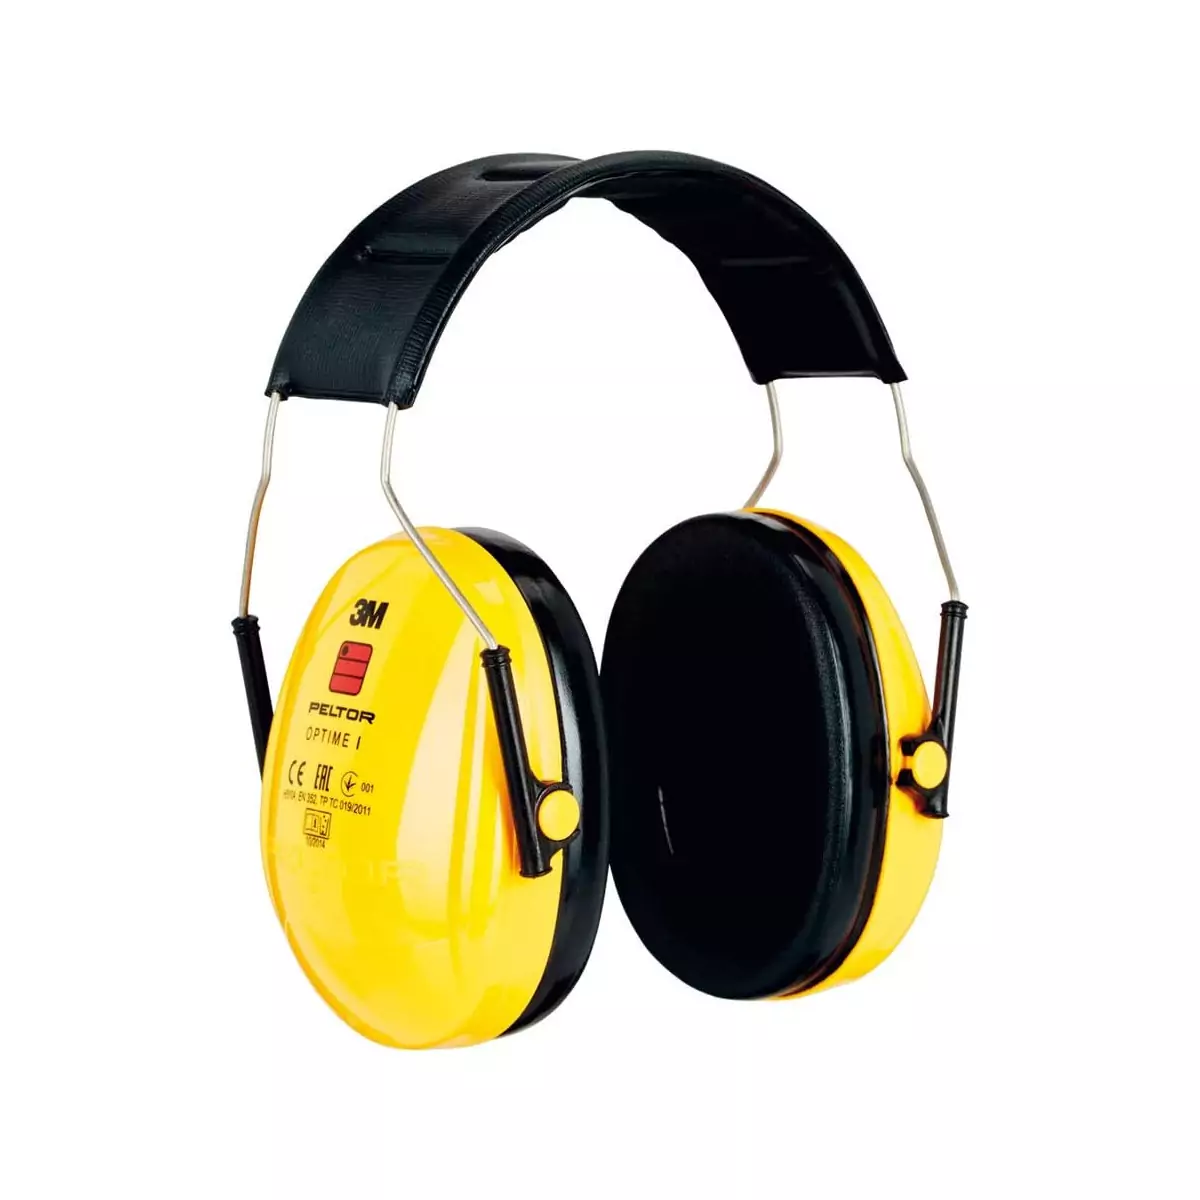 Casque antibruit jaune, Protection auditive 3M PELTOR, Casque Optime haute visibilité, Conception ergonomique PELTOR.